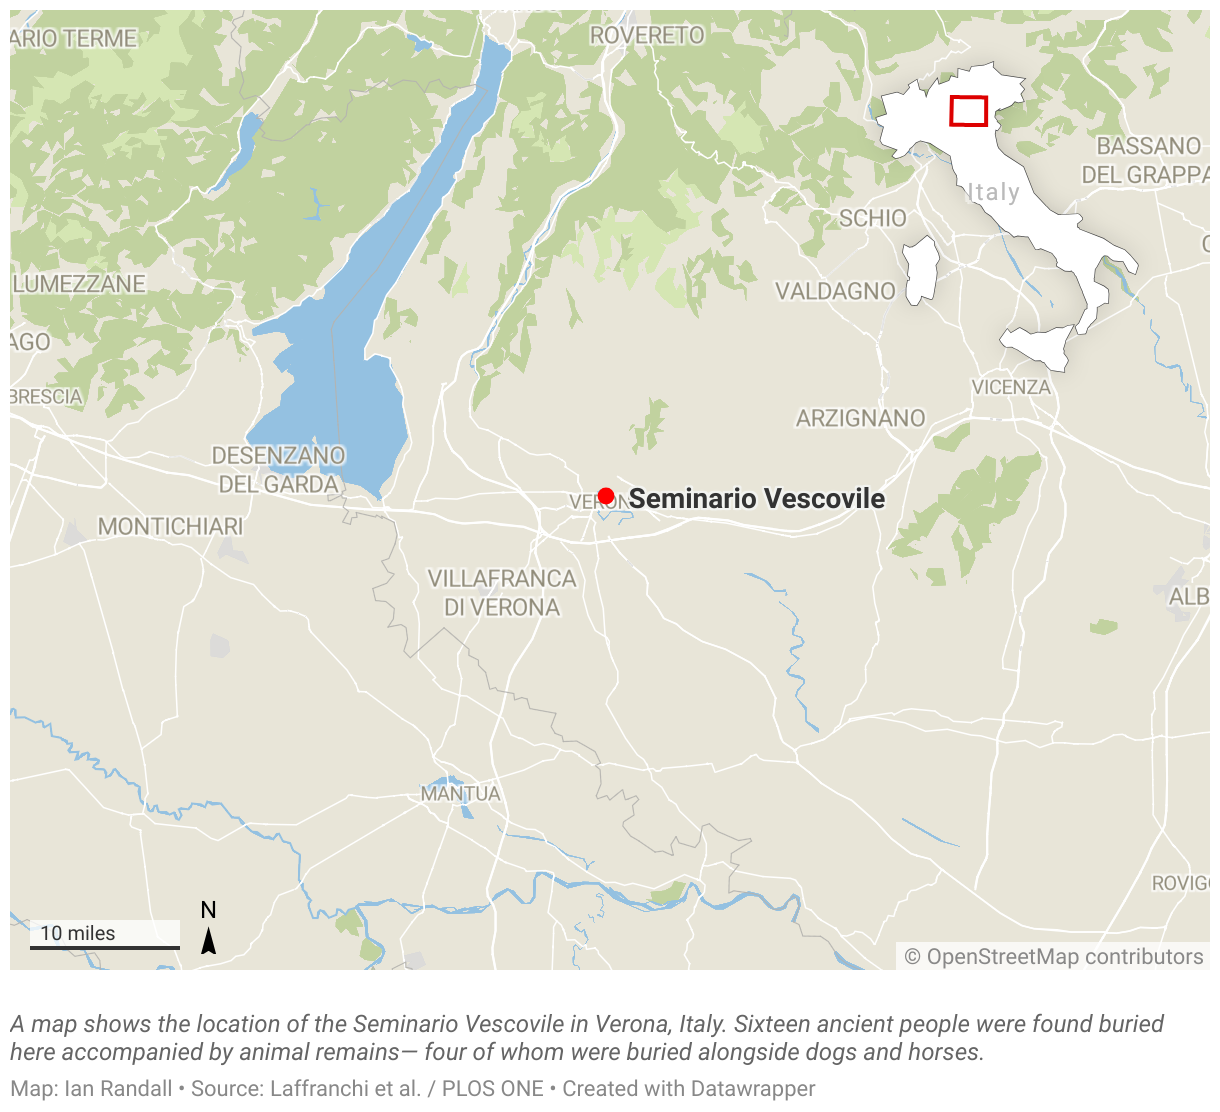 A map shows the location of the Seminario Vescovile in Verona, Italy.